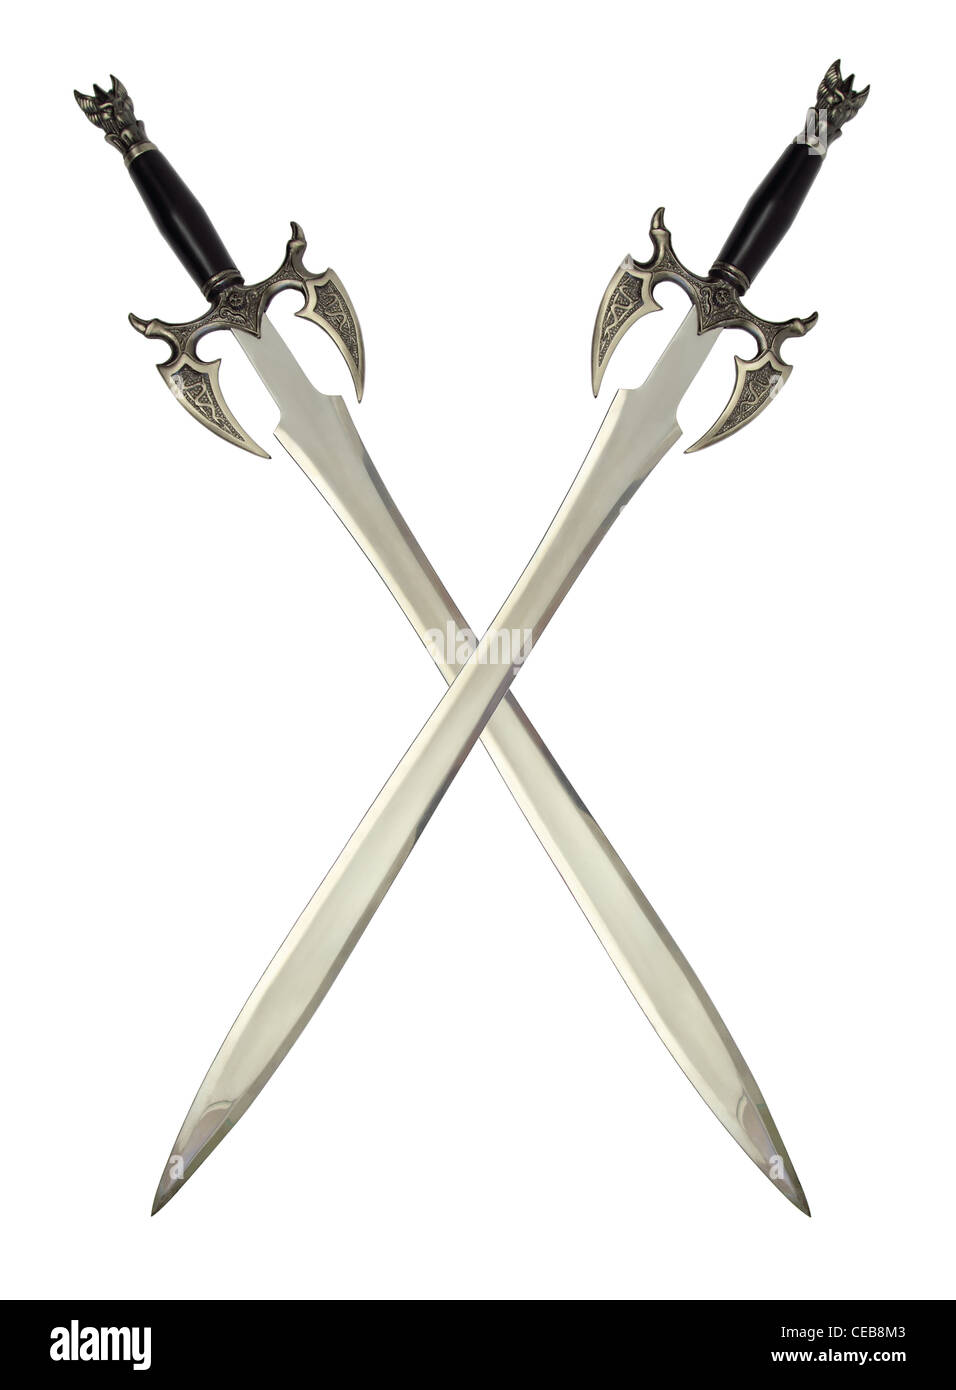 medieval swords Stock Photo